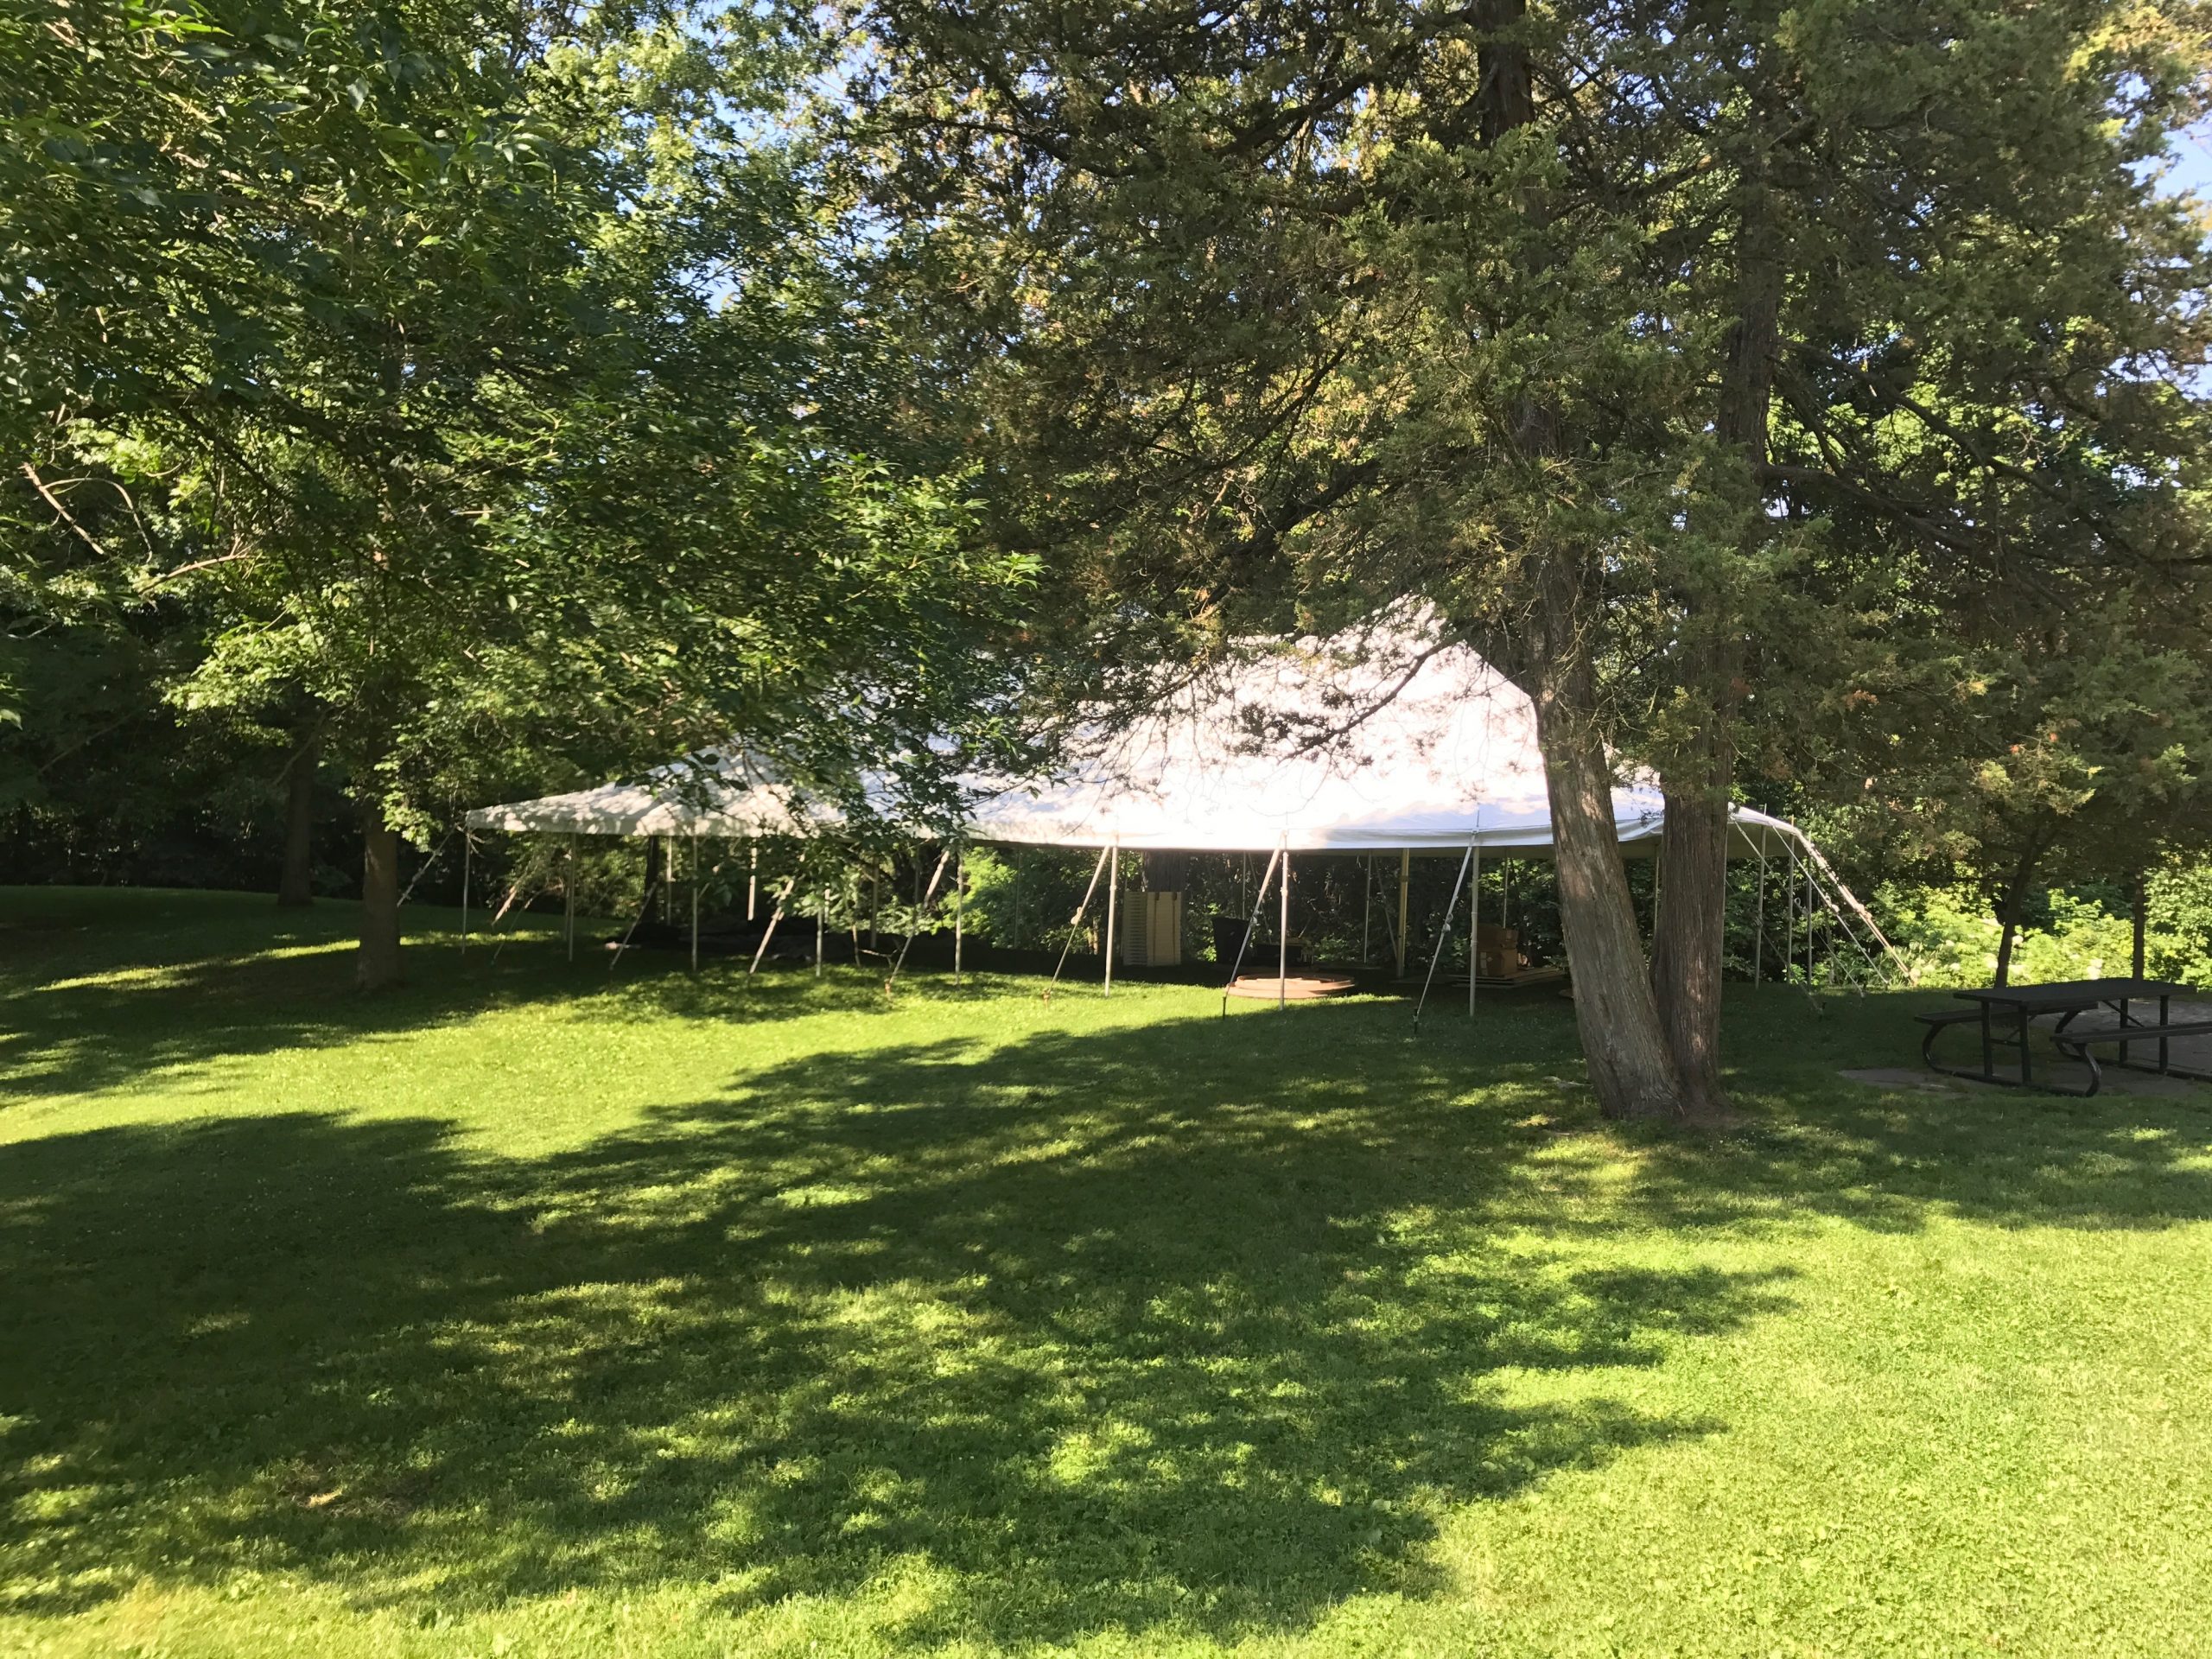 Trees around the 30' x 60' rope and pole wedding tent in Mount Vernon, Iowa